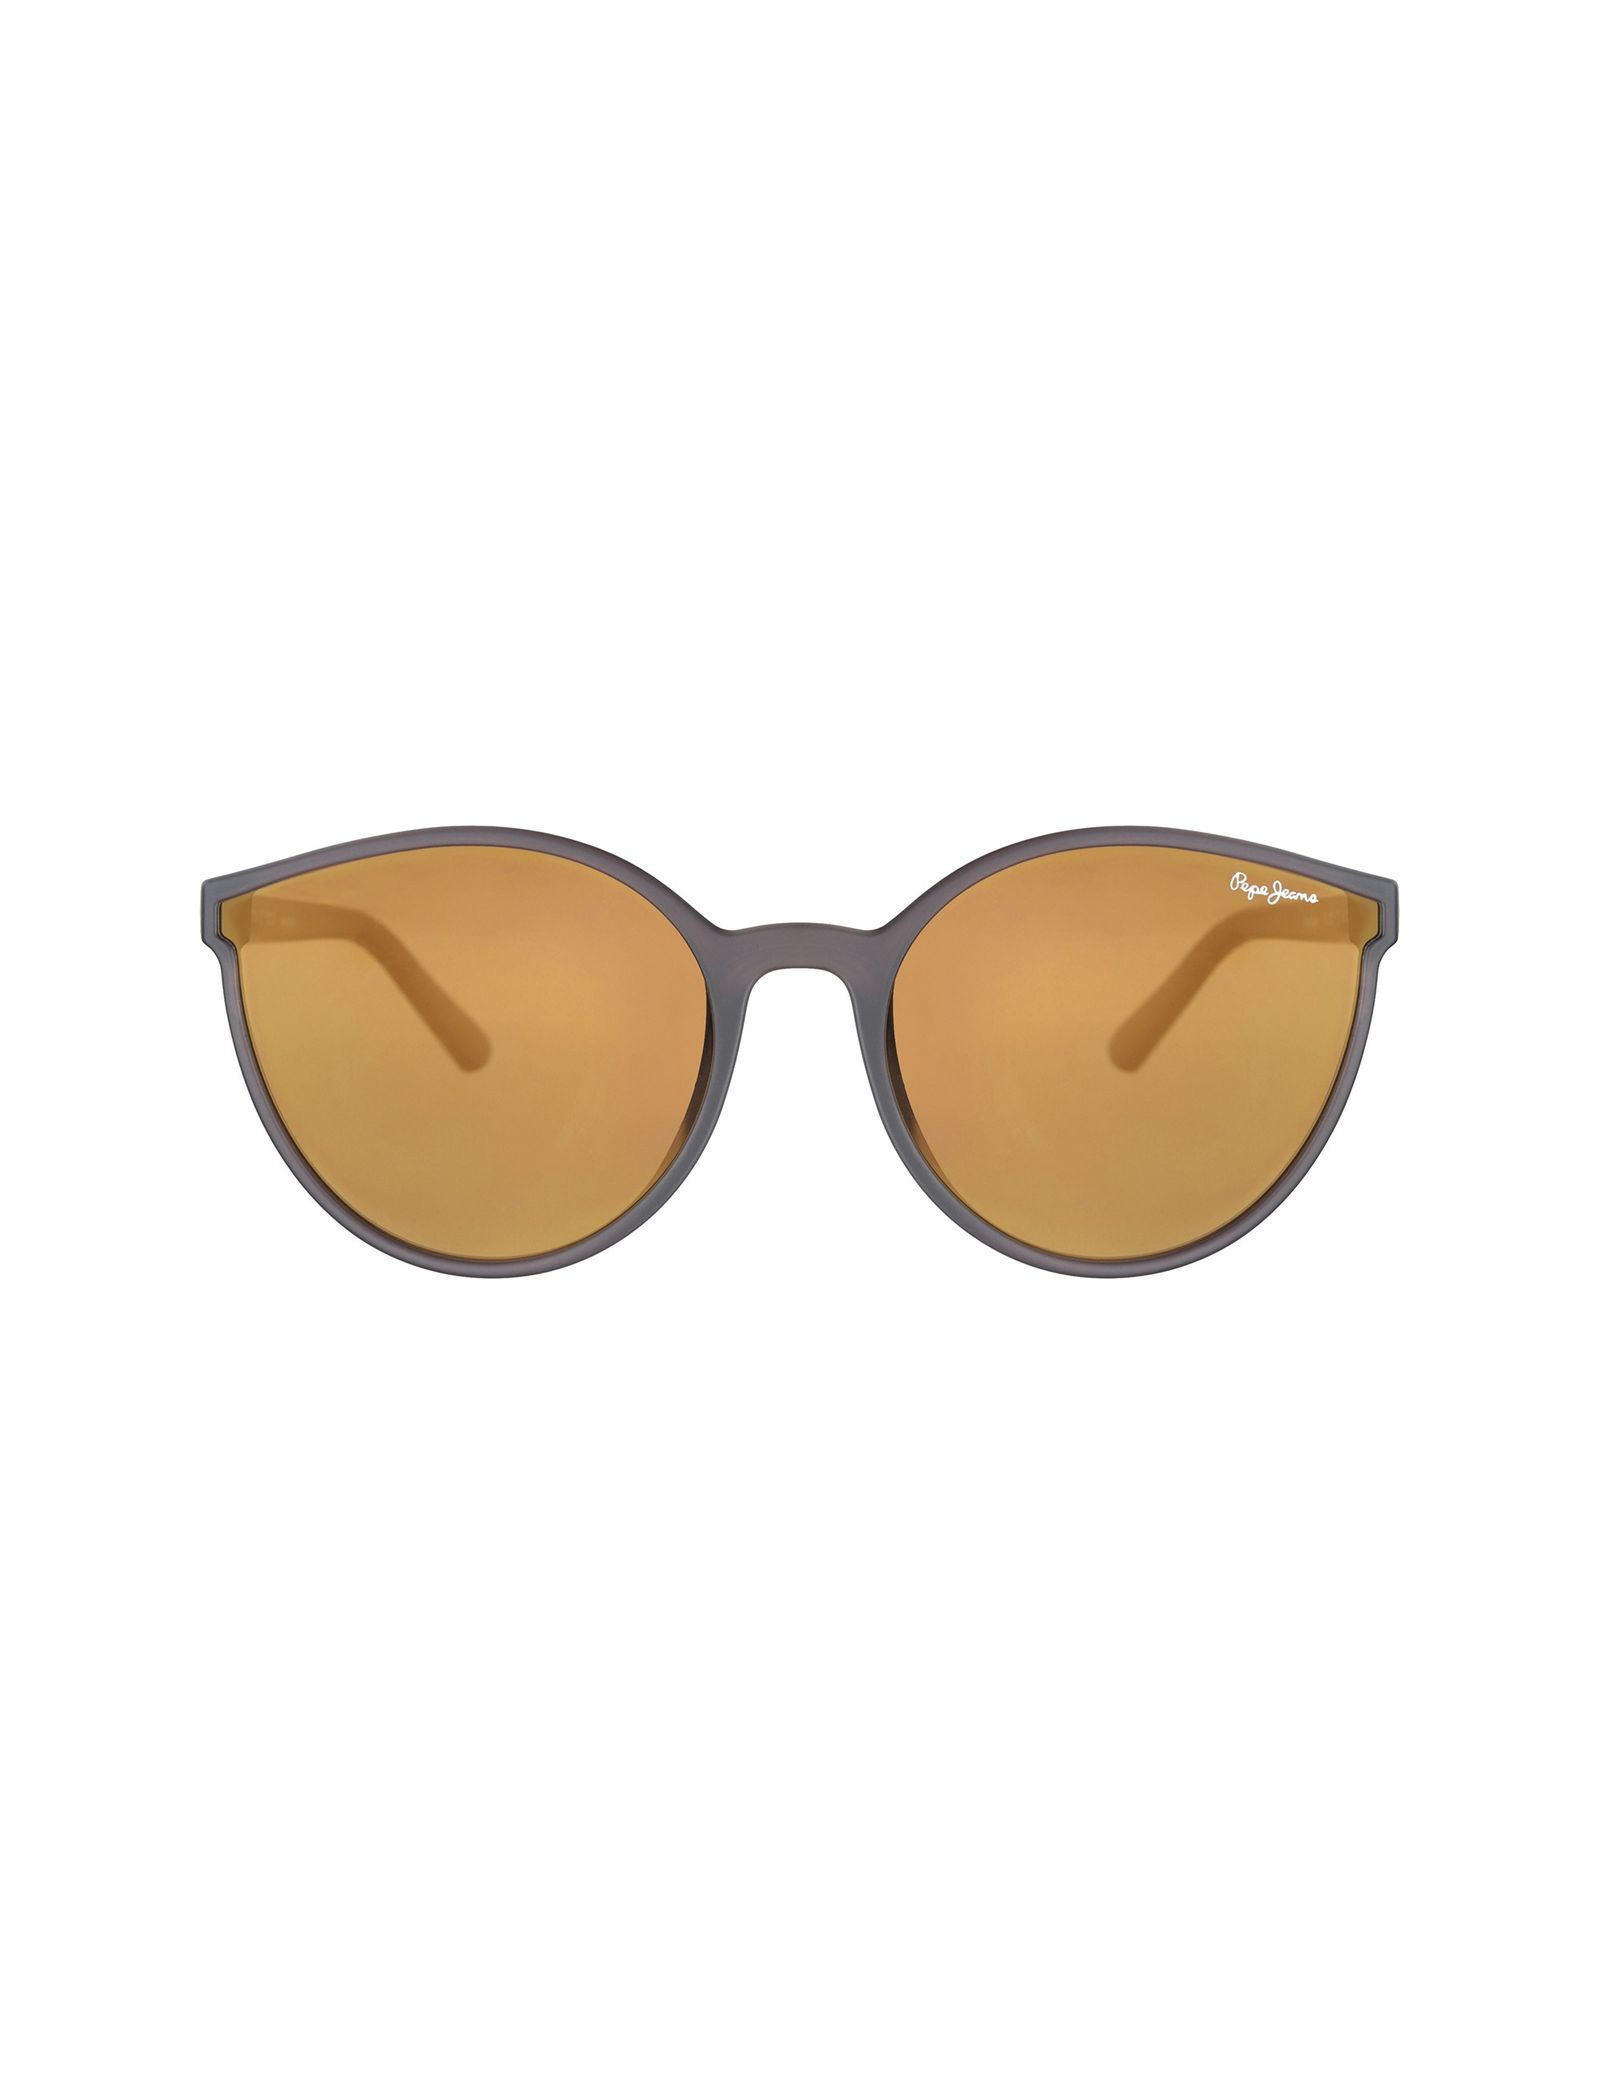 عینک آفتابی پروانه ای زنانه - پپه جینز - زغالي - 1